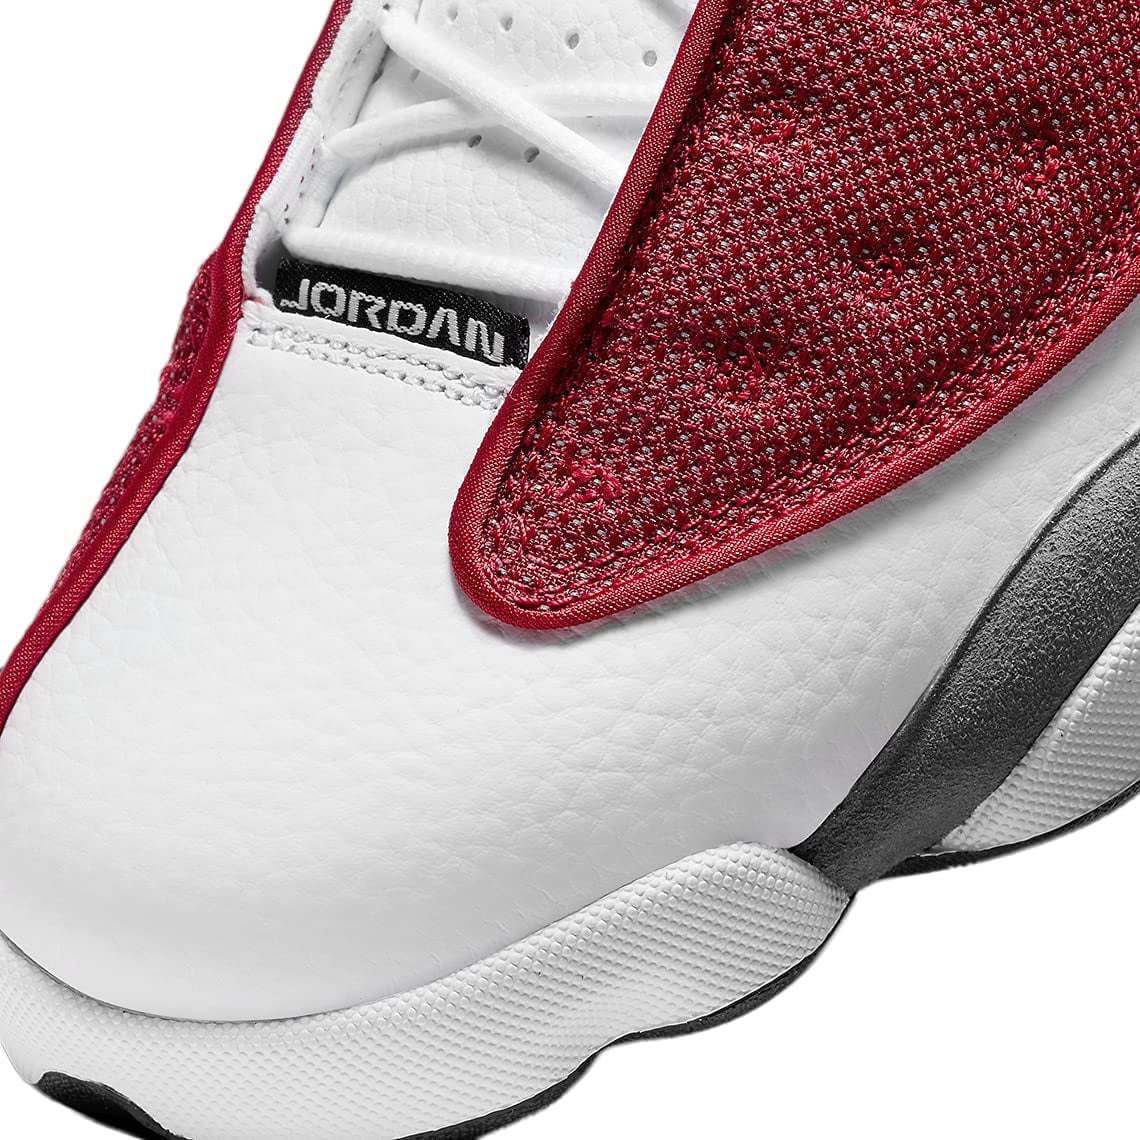 Air Jordan 13 Retro GS 'Red Flint' - Air Jordan - 884129 600 - gym red/flint  grey/white/black